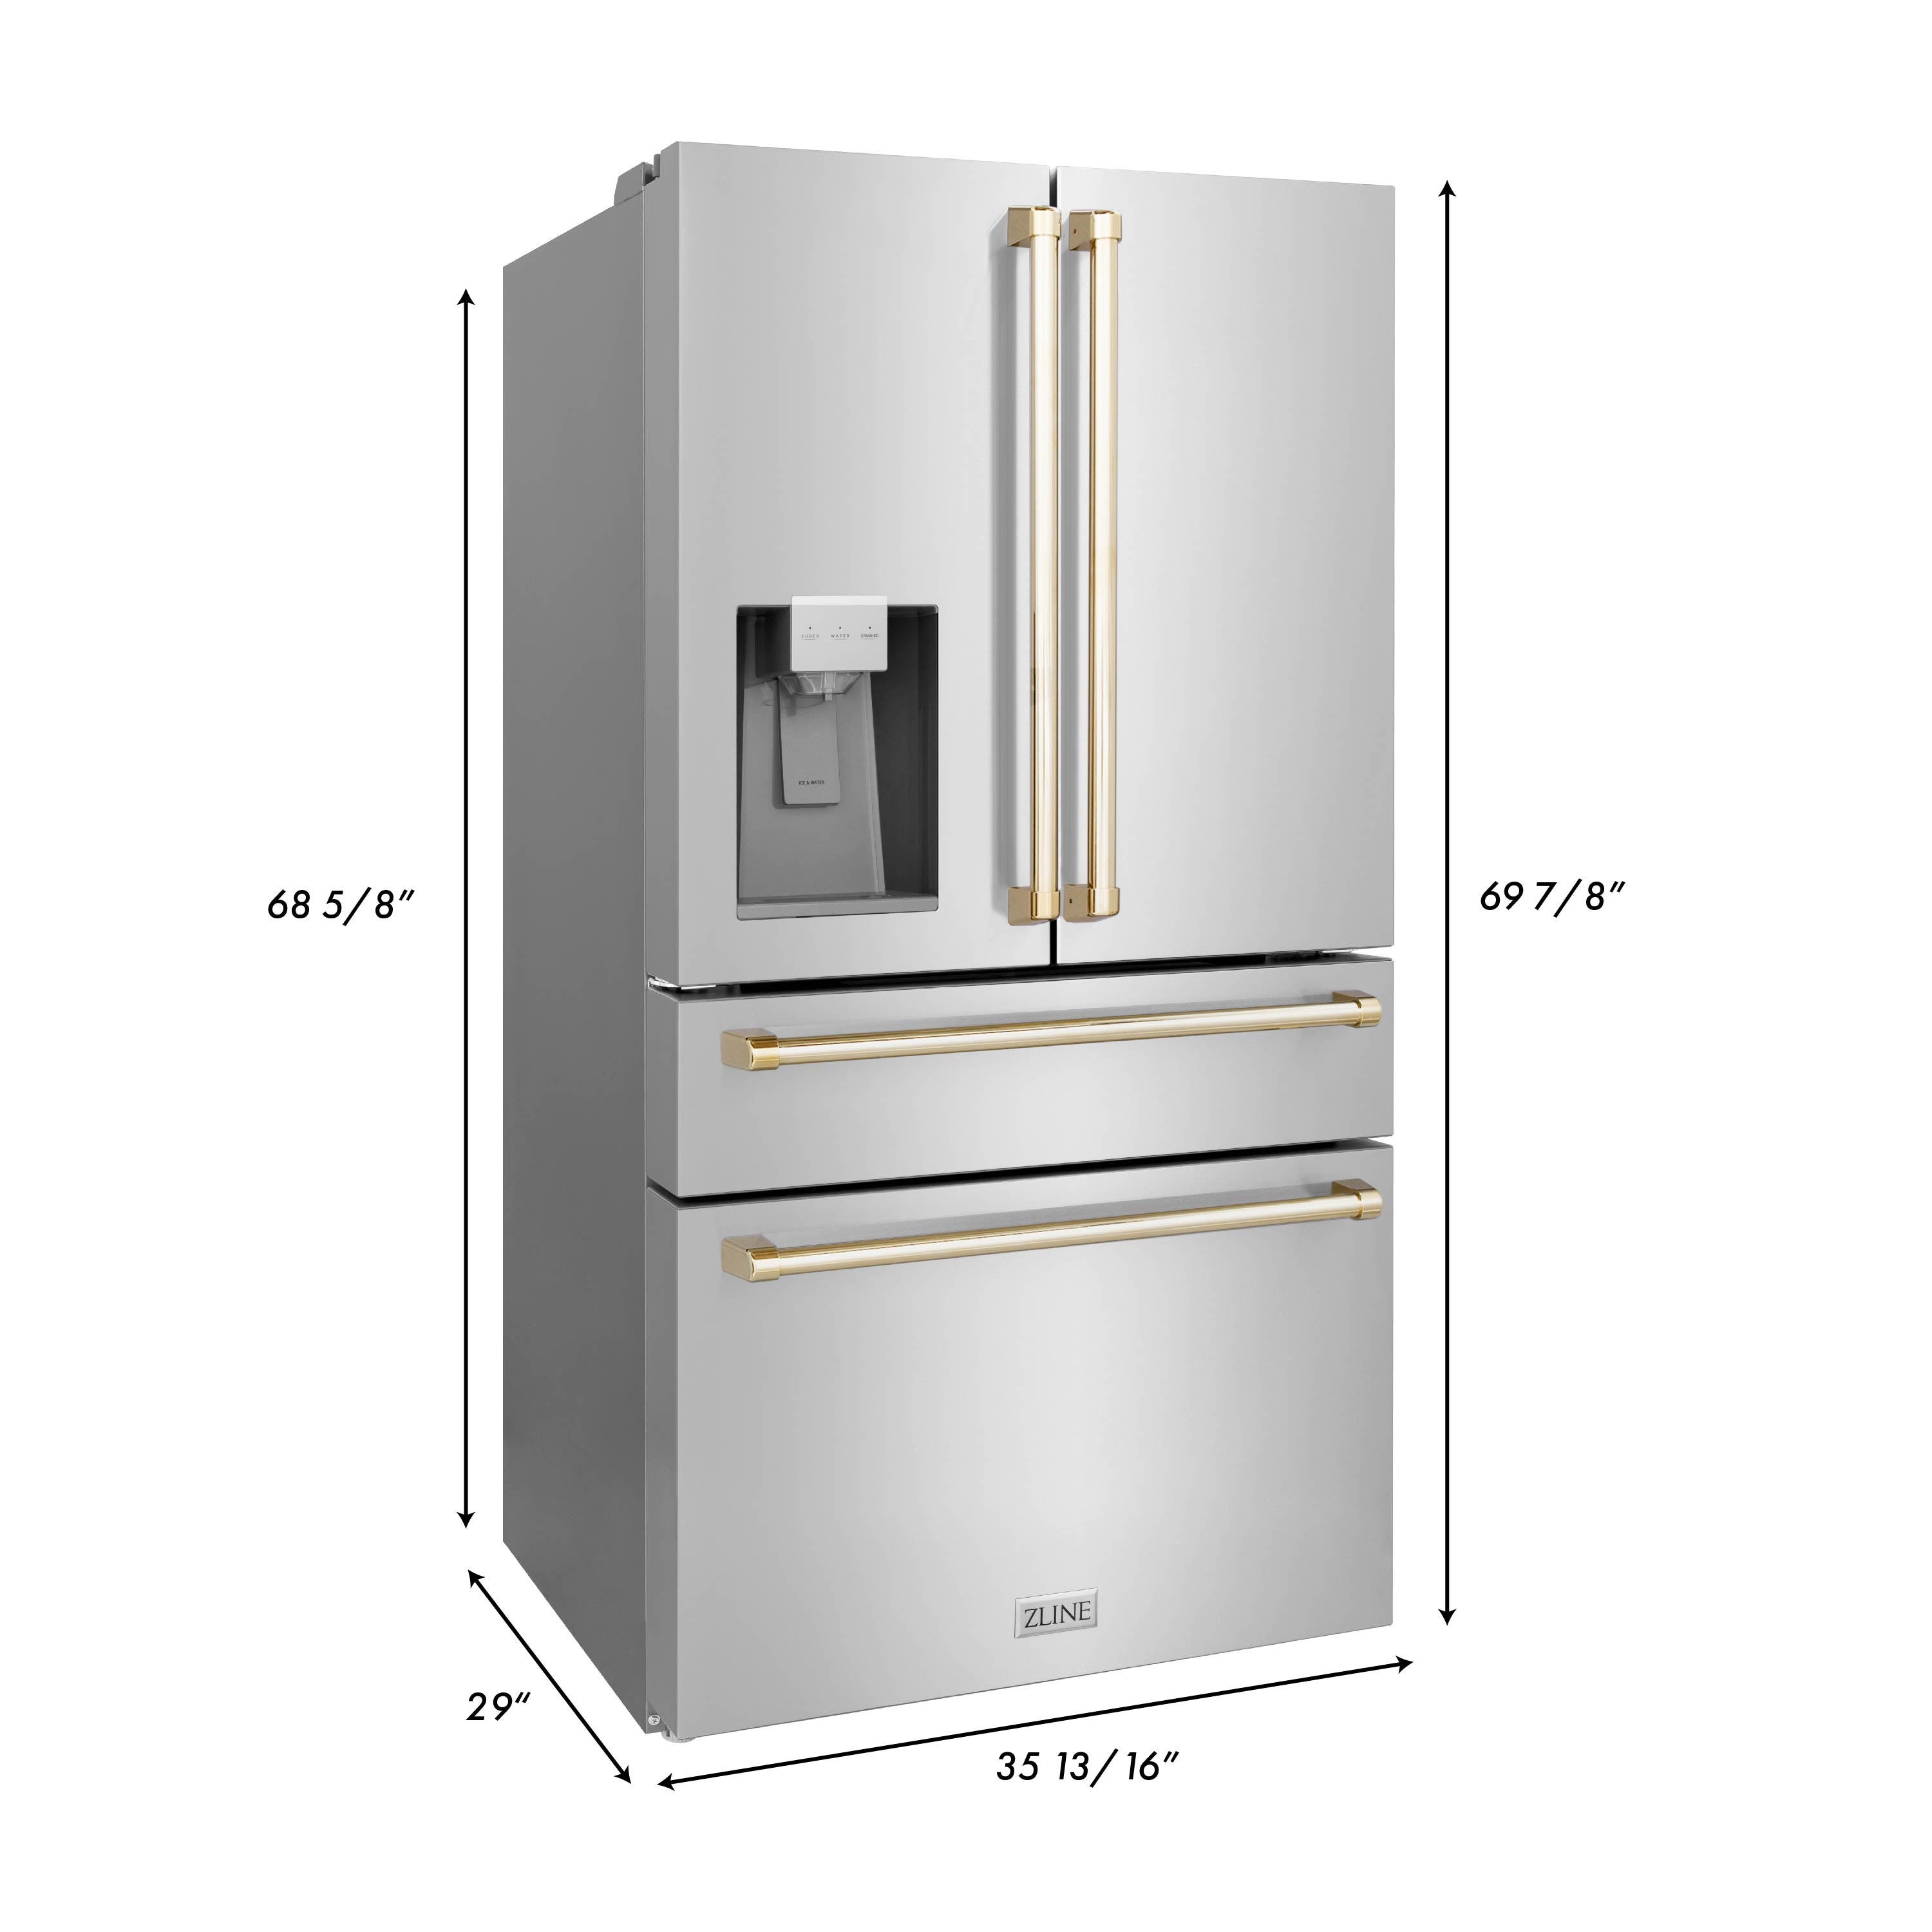 ZLINE Autograph Edition 36" French Door Refrigerator with Water Dispenser (RFMHZ-W-36) dimensional measurements.